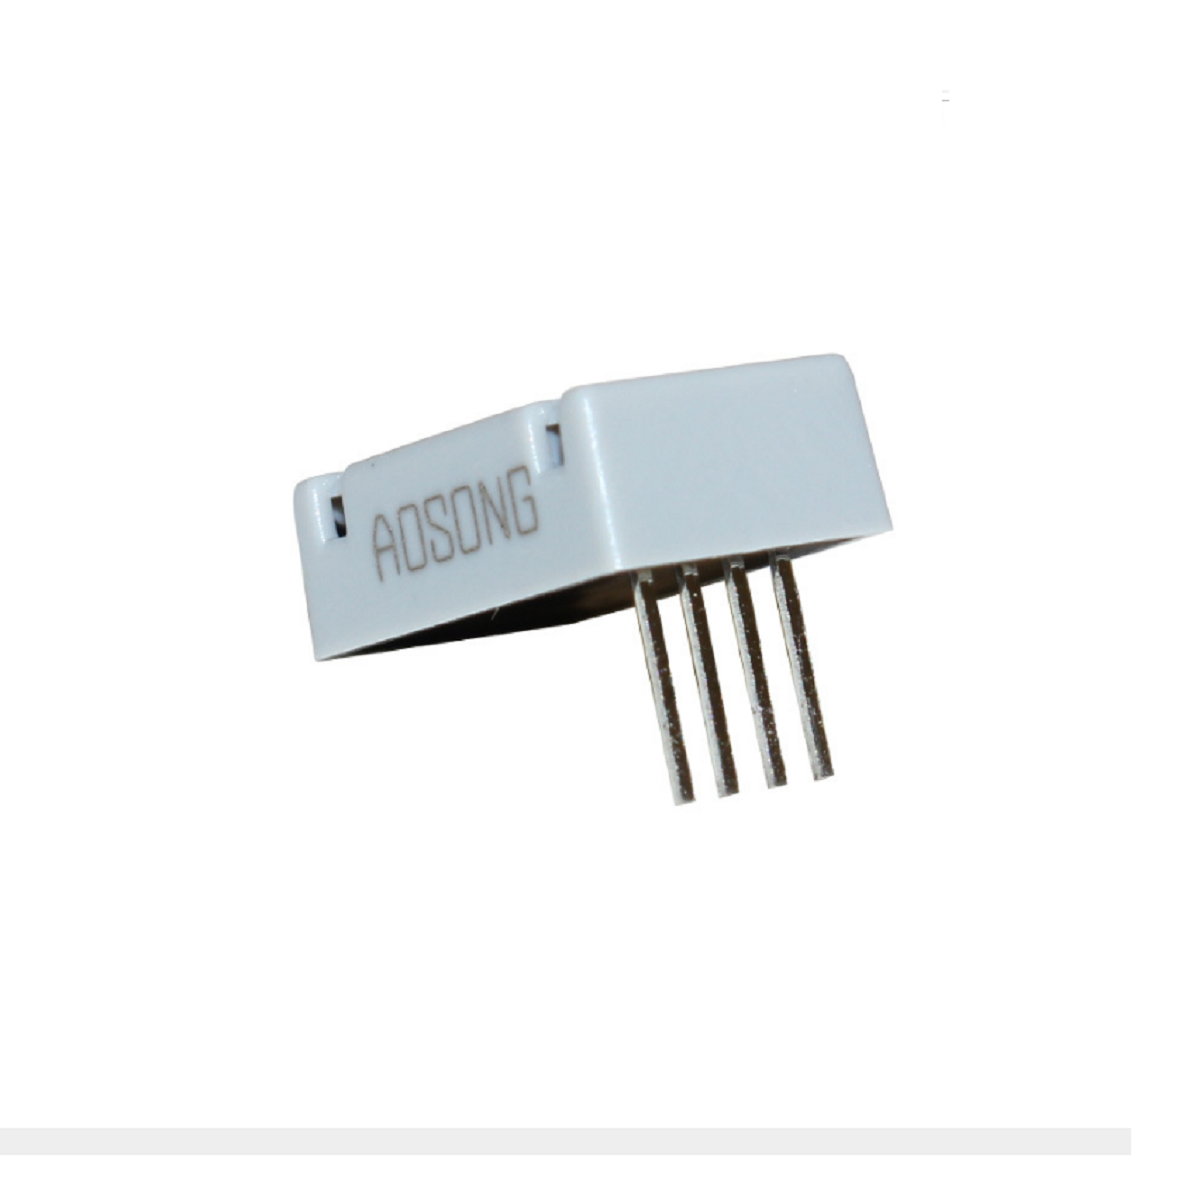 AM2322-Digital-Temperature-and-Humidity-Sensor-Module-High-Precision-Single-Bus-Humidity-Sensor-Capa-1557307-4